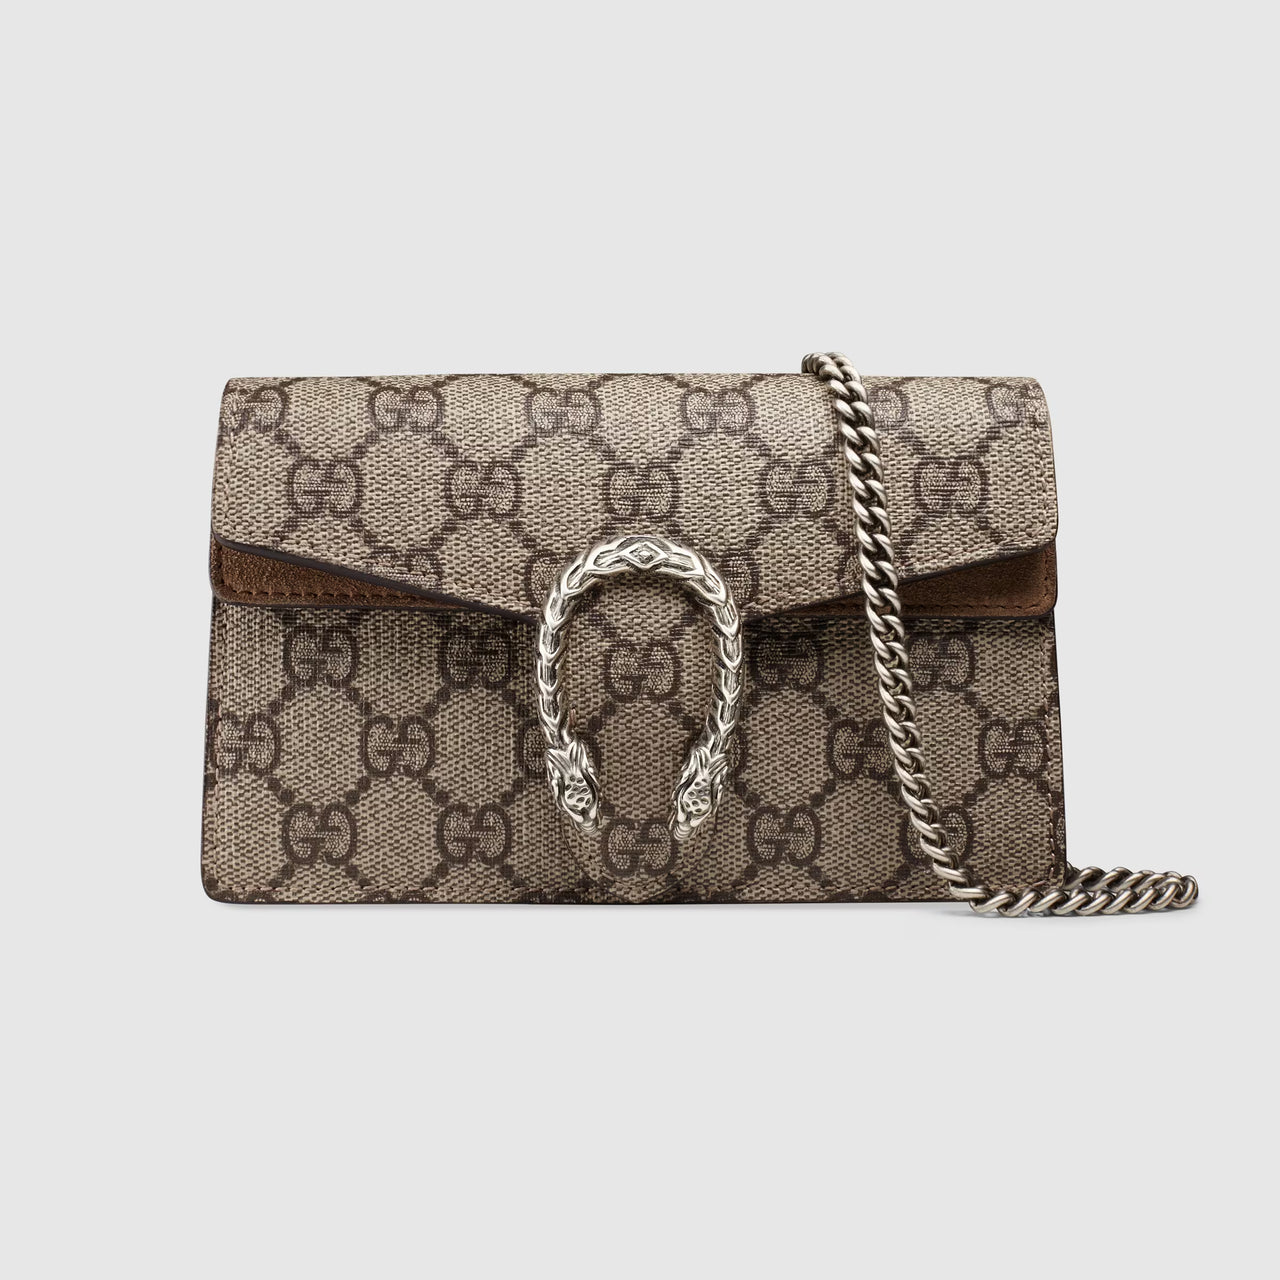 Gucci Dionysus GG Super Mini Bag (GG Supreme)